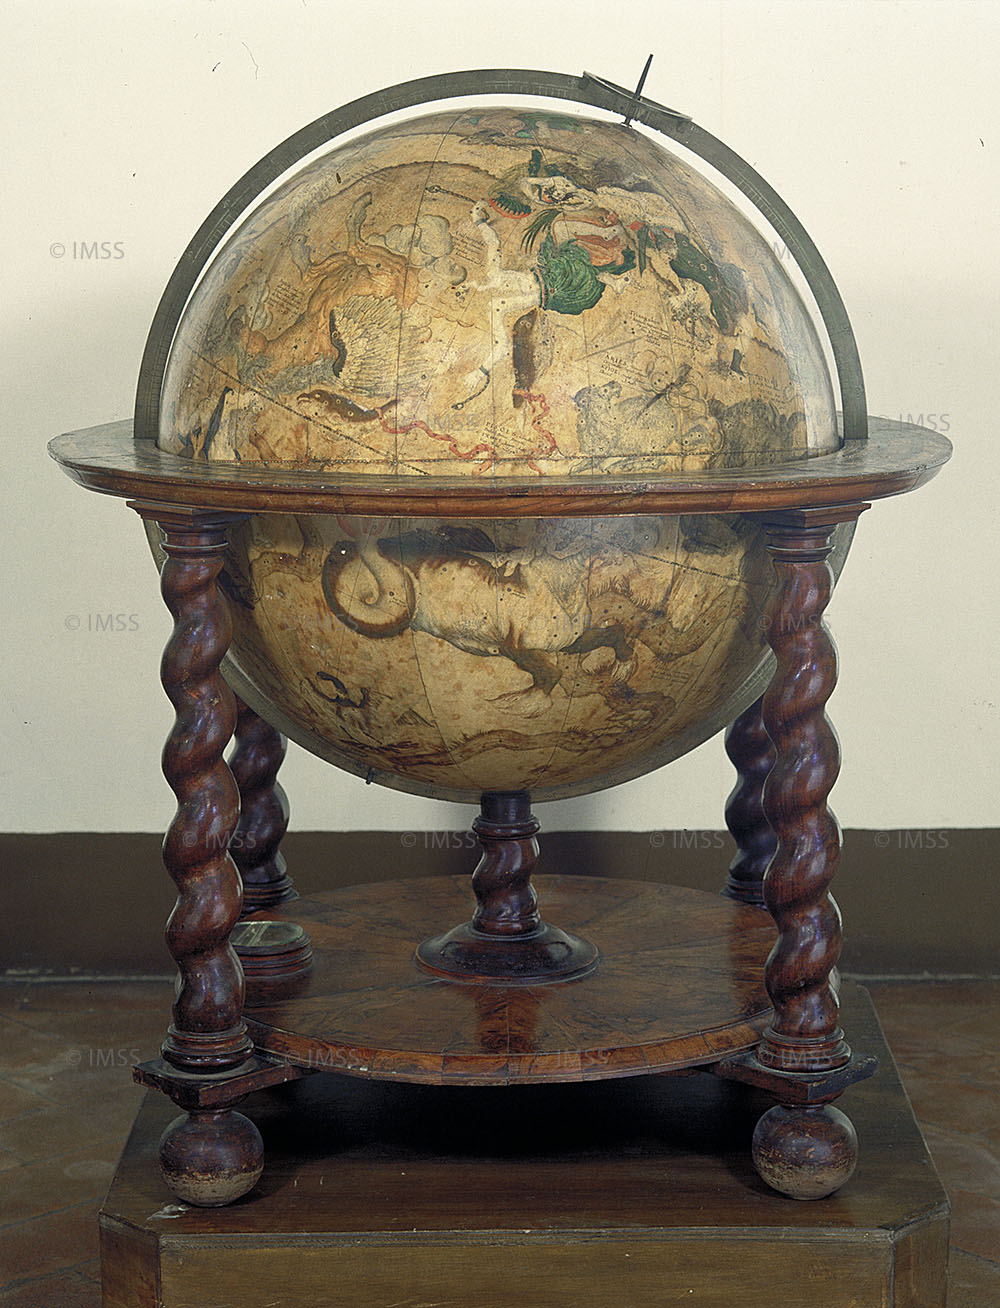 Willem Jansz Blaeu, Celestial globe